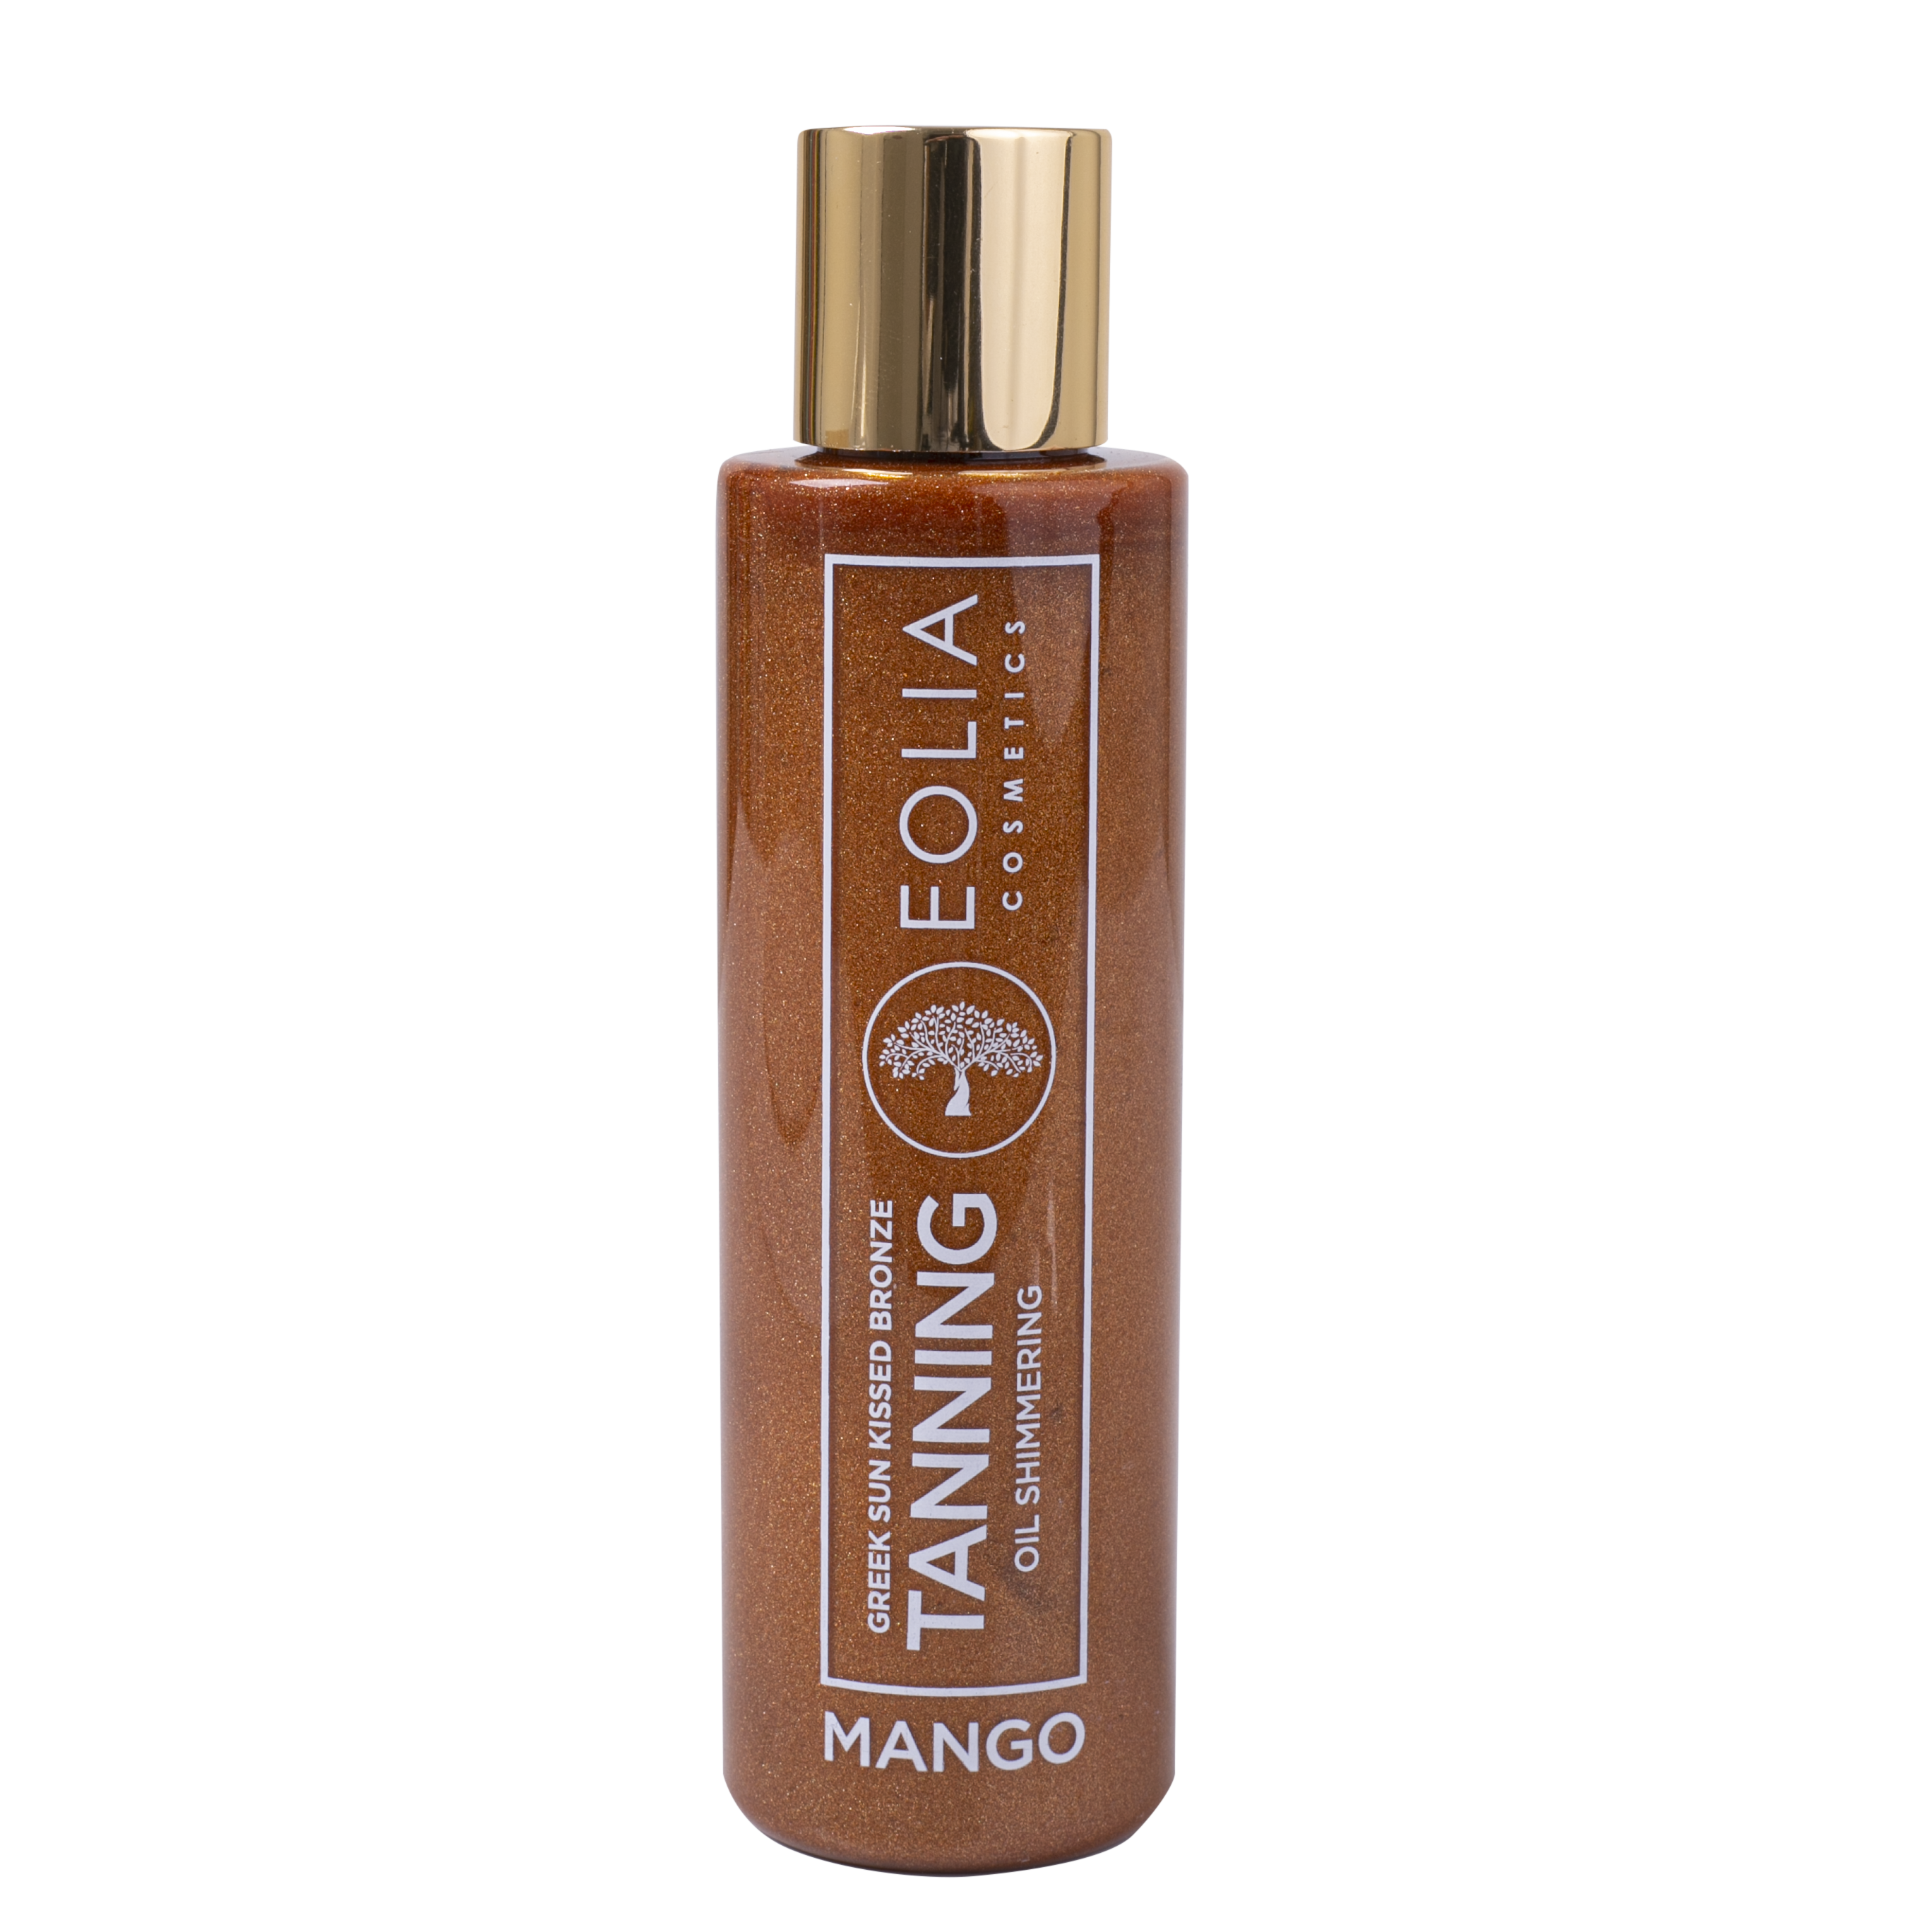 Eolia Tanning oil mango